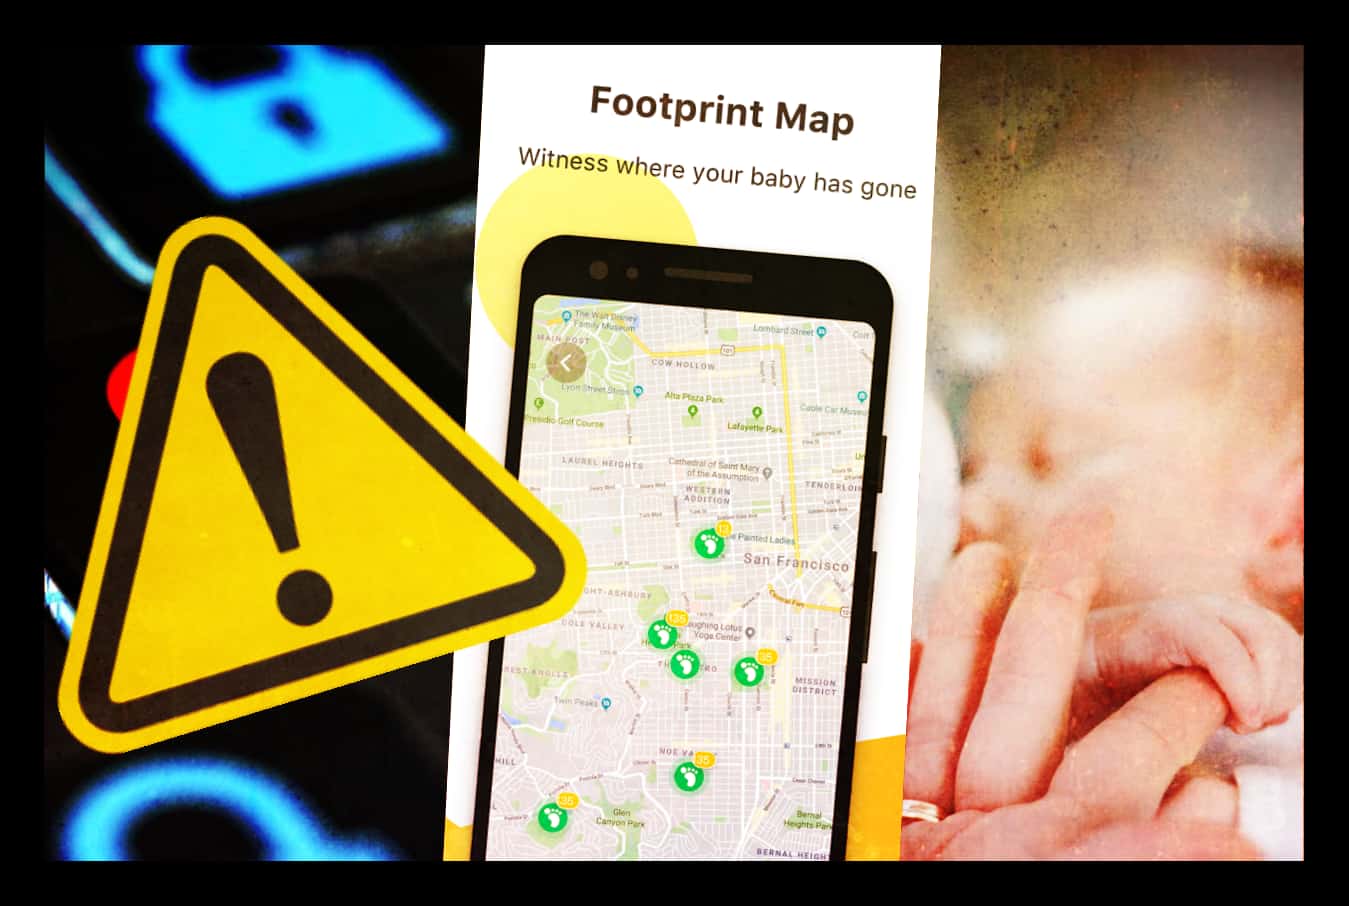 Peekaboo Moments app exposes baby photos, videos & location data